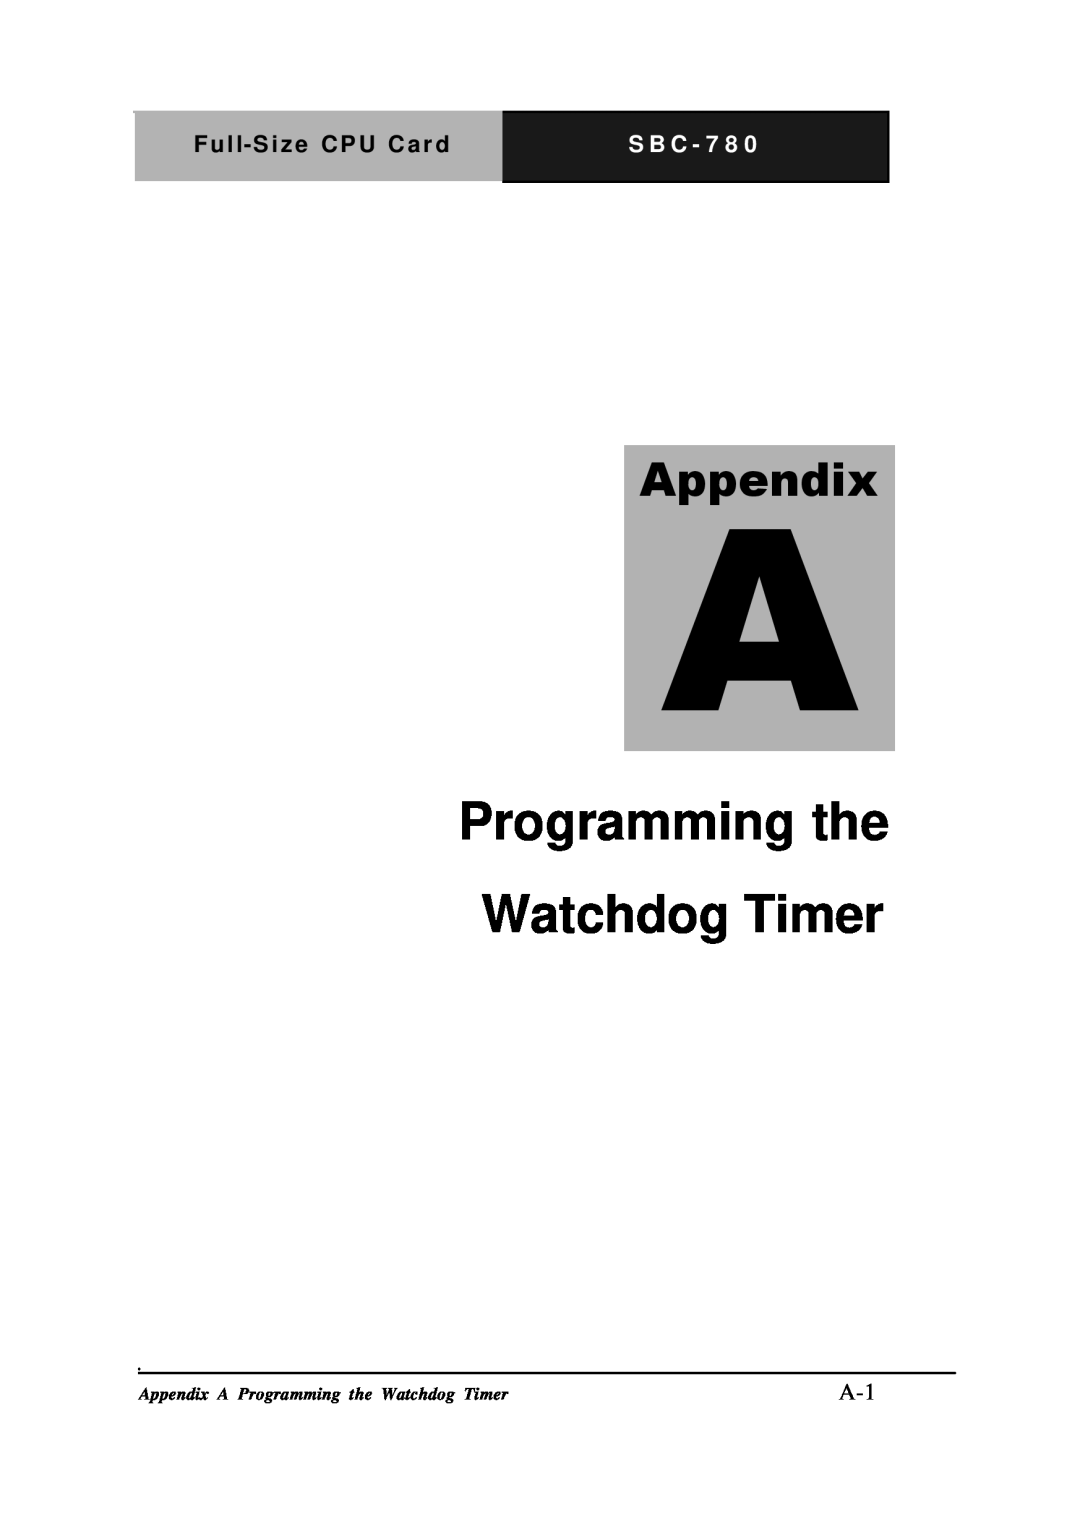 Intel SBC-780 manual S B C - 7 8, Appendix A Programming the Watchdog Timer 